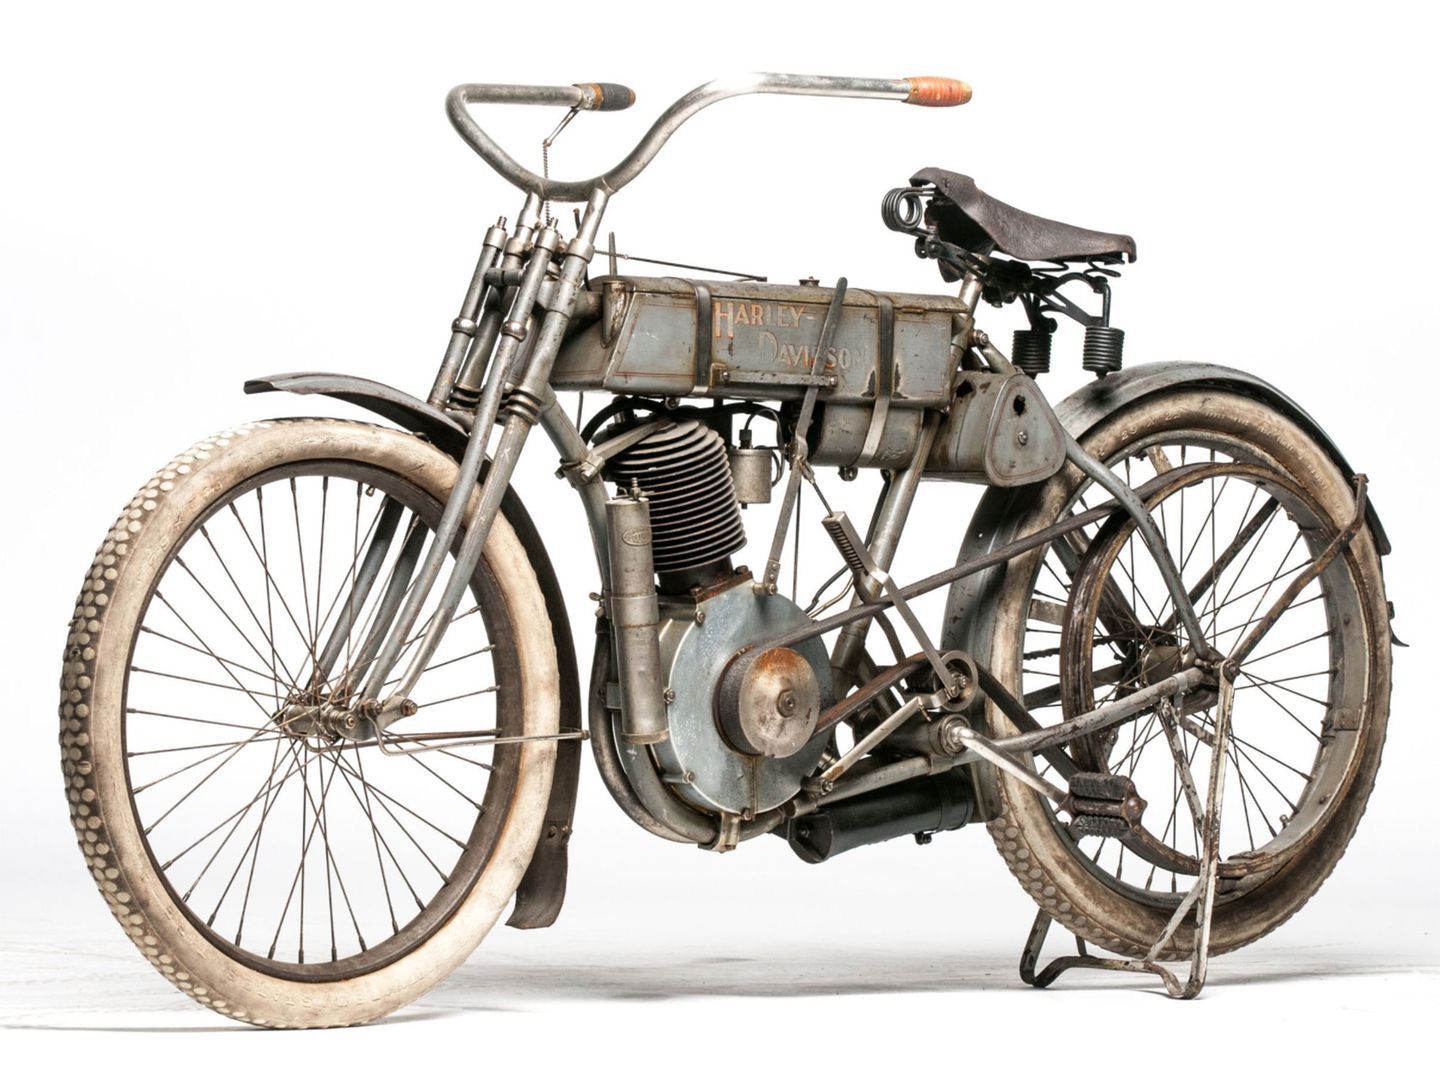 A 1907 Harley-Davidson Strap Tank motorcycle